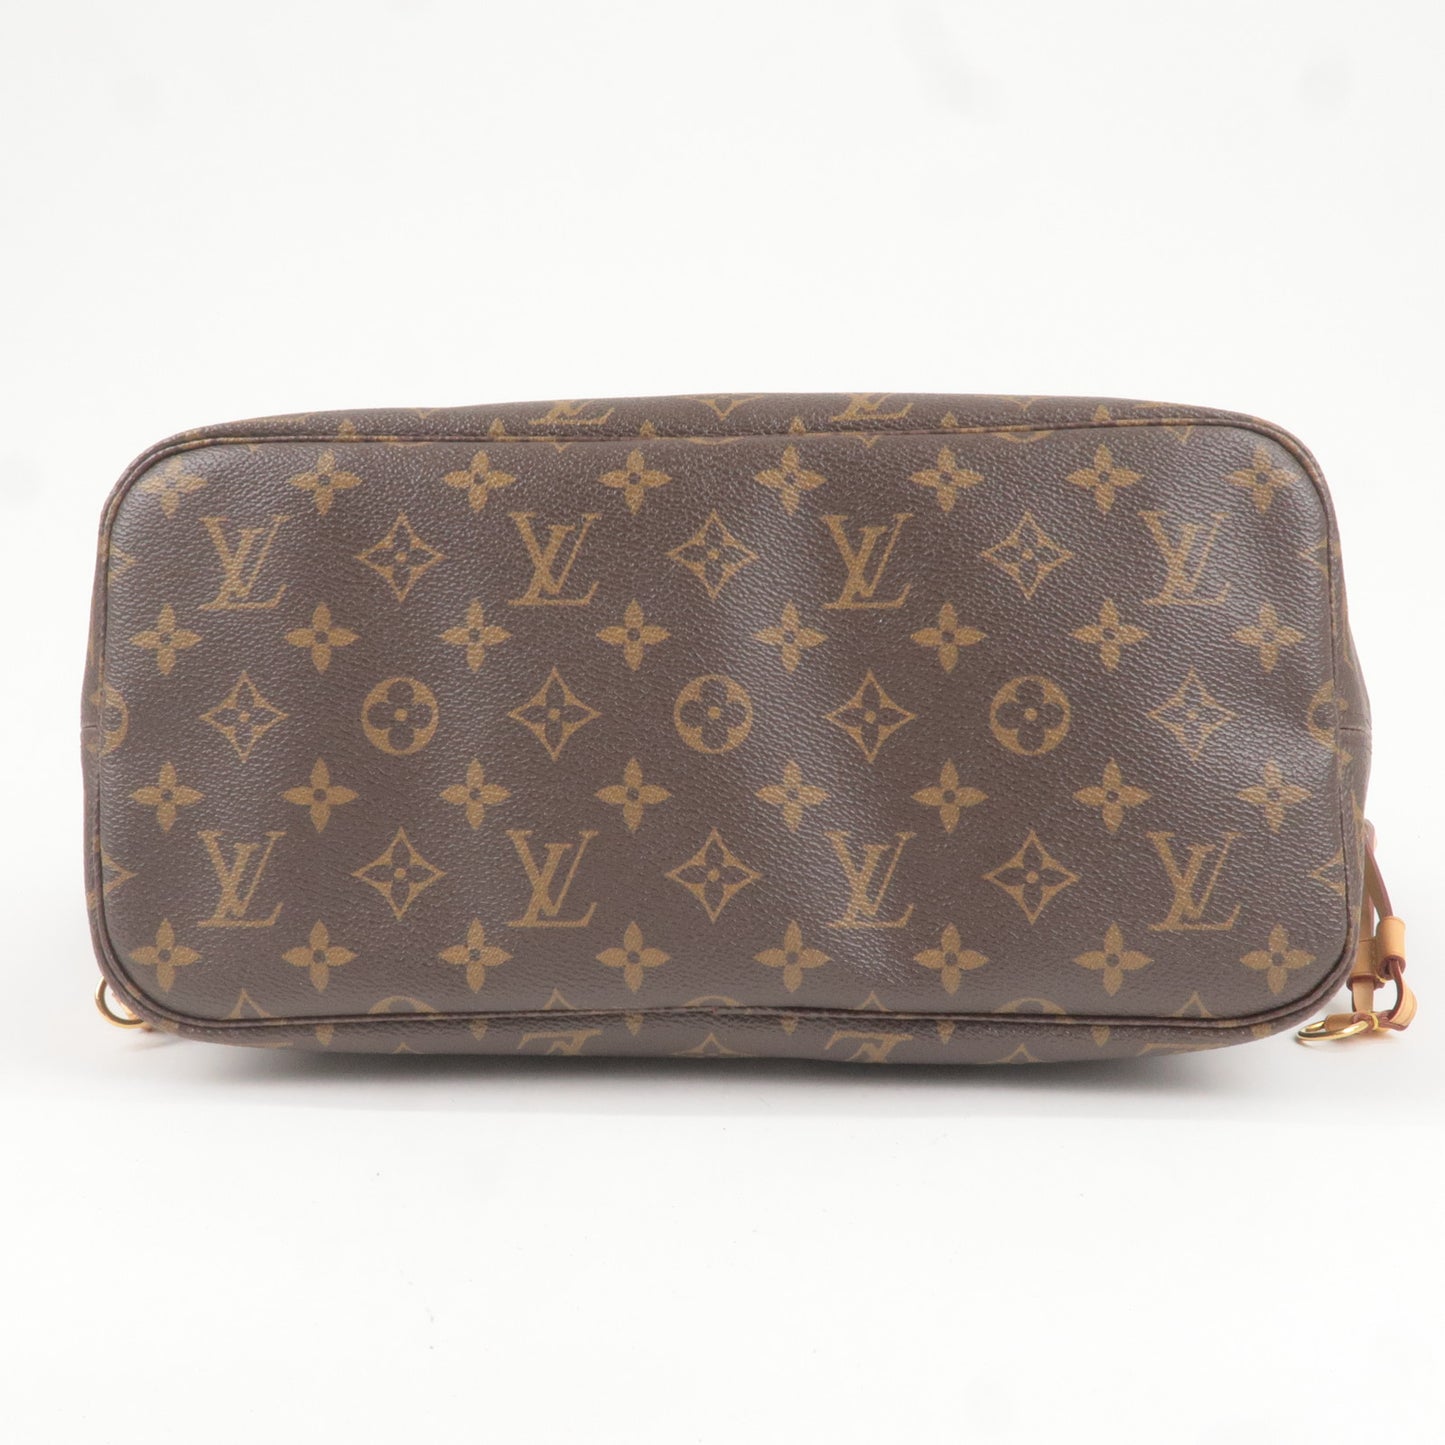 Louis Vuitton Monogram Neverfull MM Tote Bag Cerise M41177